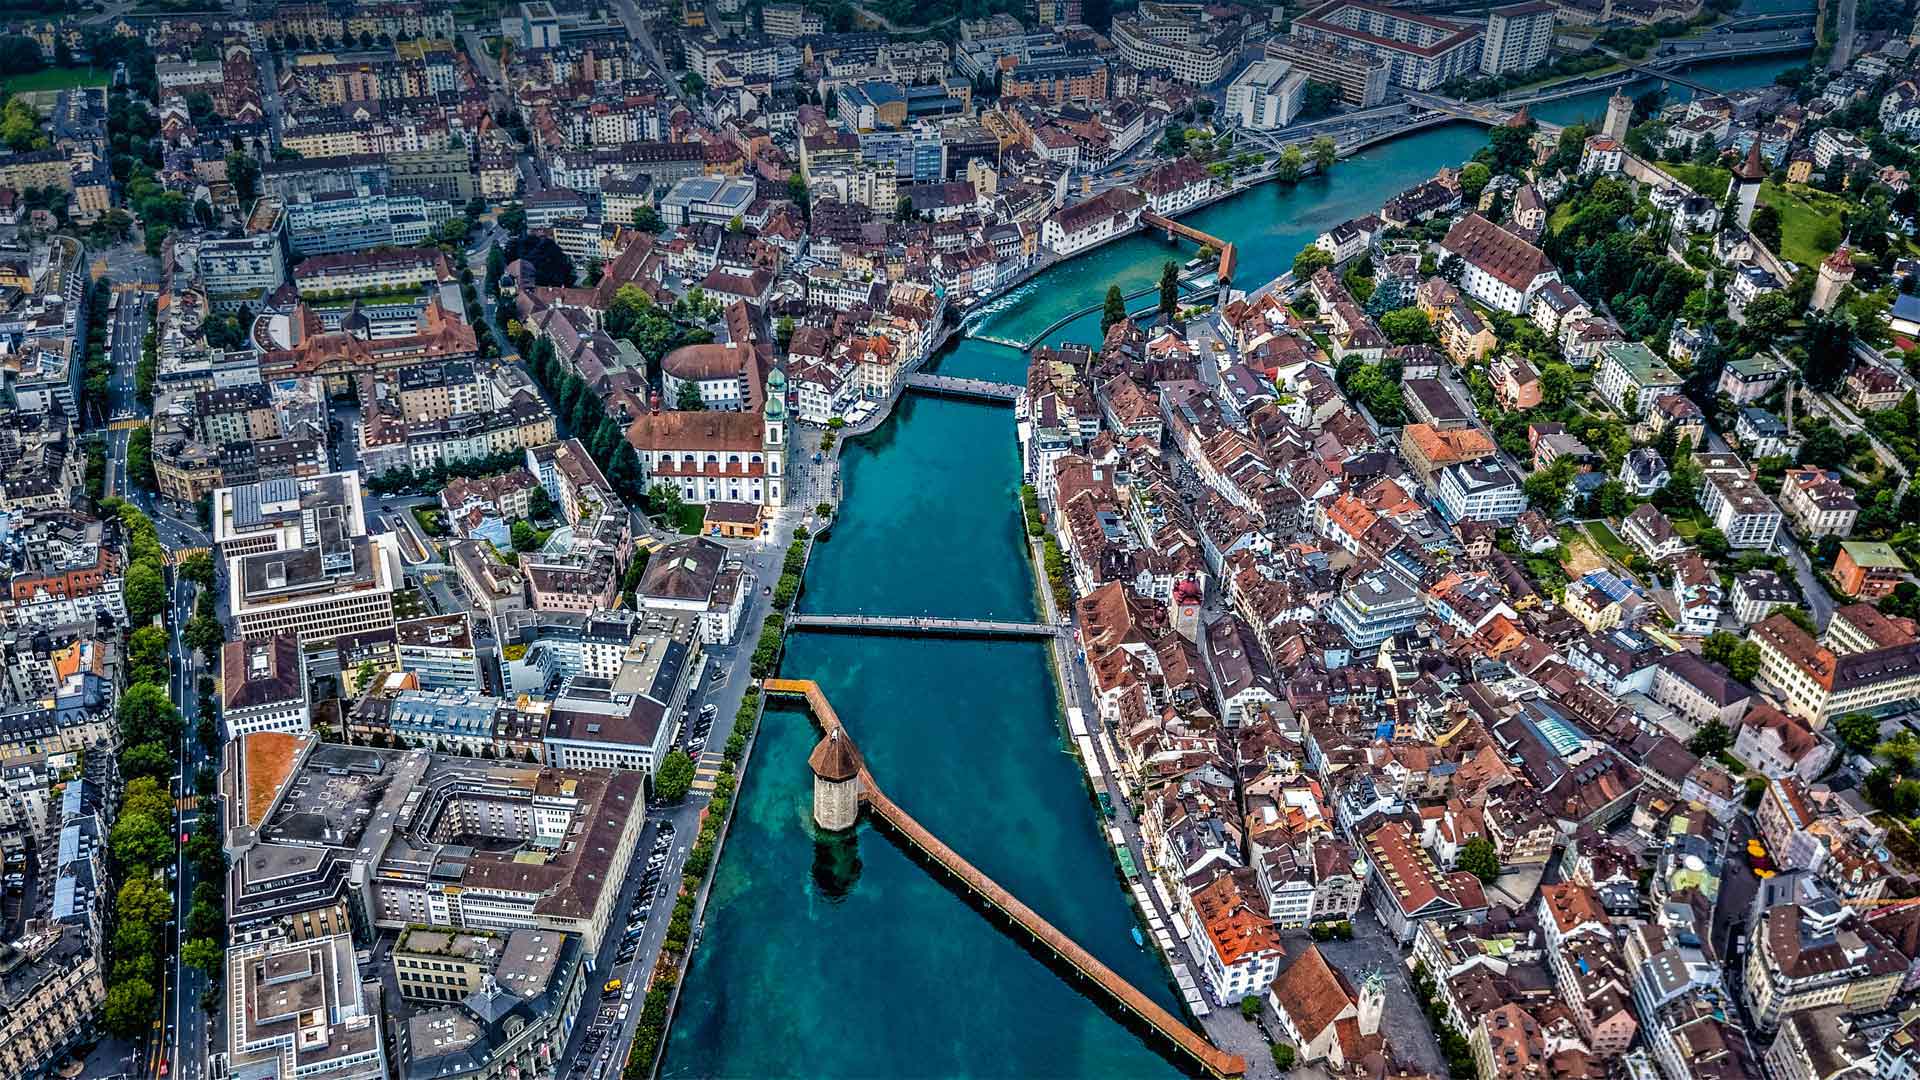 Aerial view of Chapel Bridge over the River Reuss in Lucerne, Switzerland - Neleman Initiative/Gallery Stock)